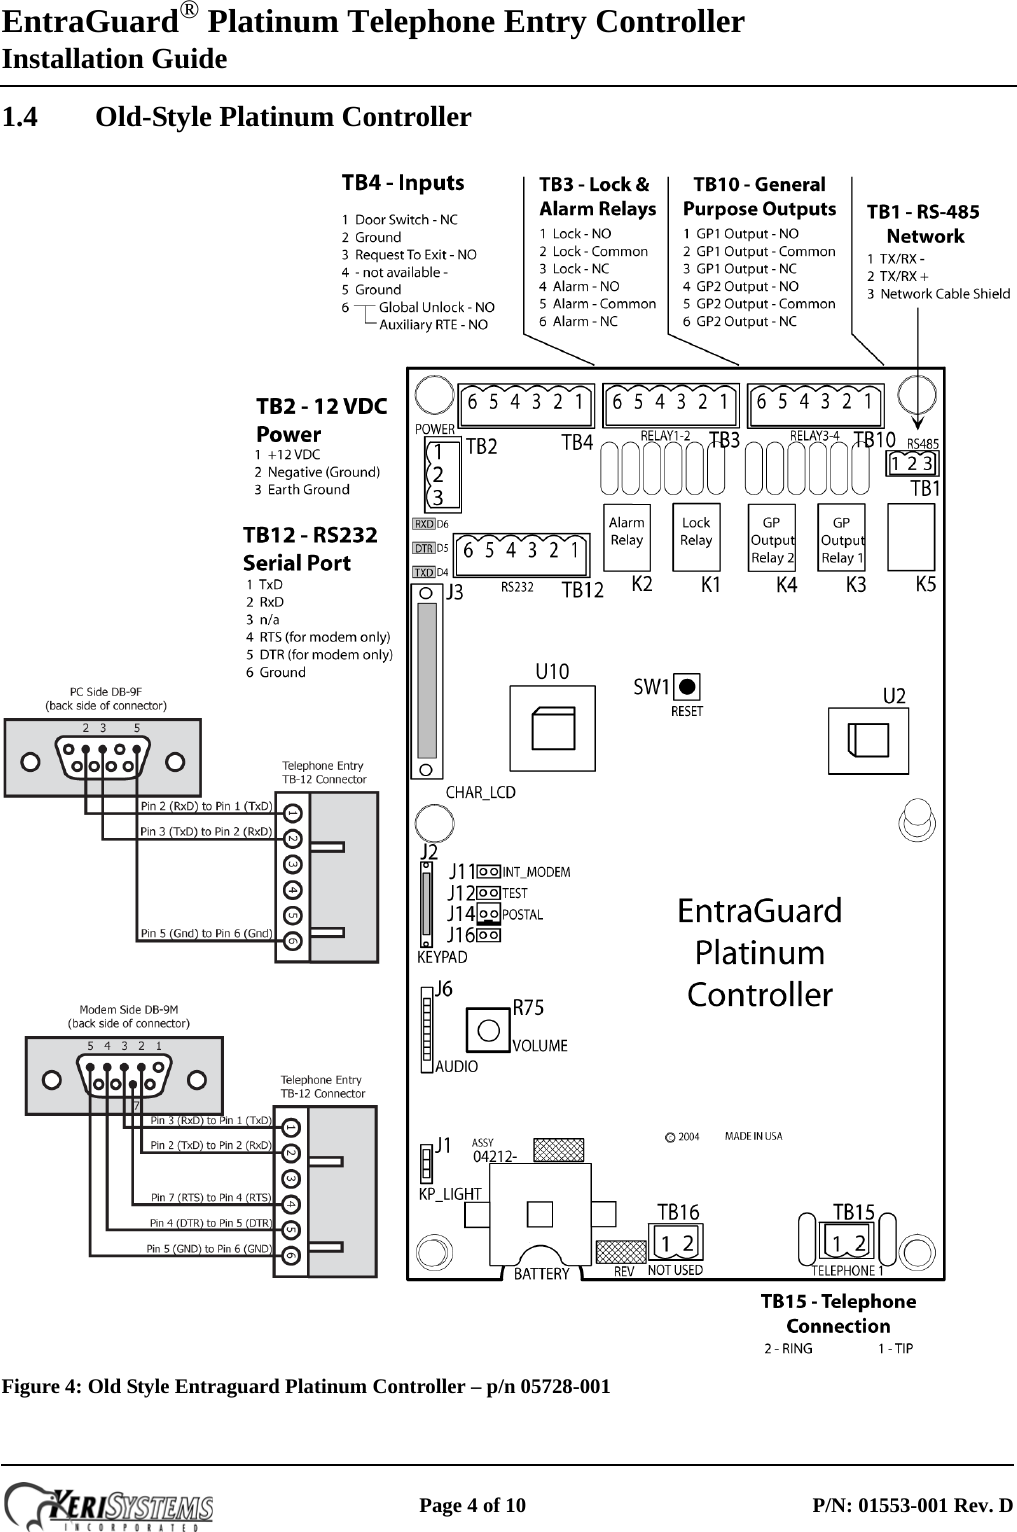 Page 4 of 10 - Keri Systems EntraGuard_Platinum_Installation_Guide Entra Guard Platinum Telephone Entry Controller Installation Guide Entraguard